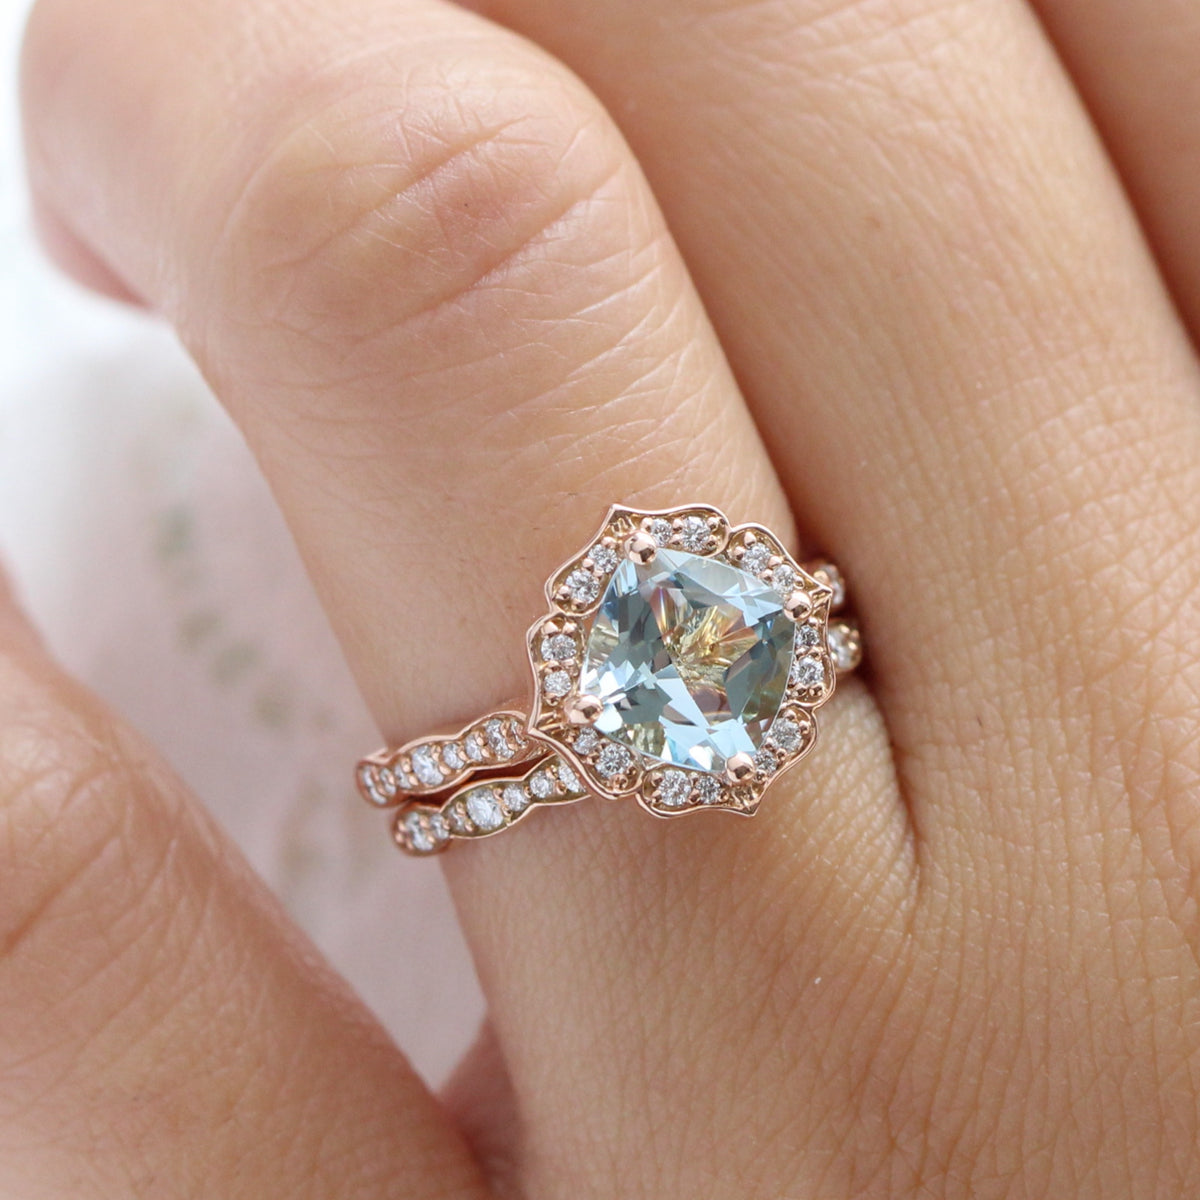 Large aquamarine ring rose gold matching diamond wedding ring stack la more design jewelry